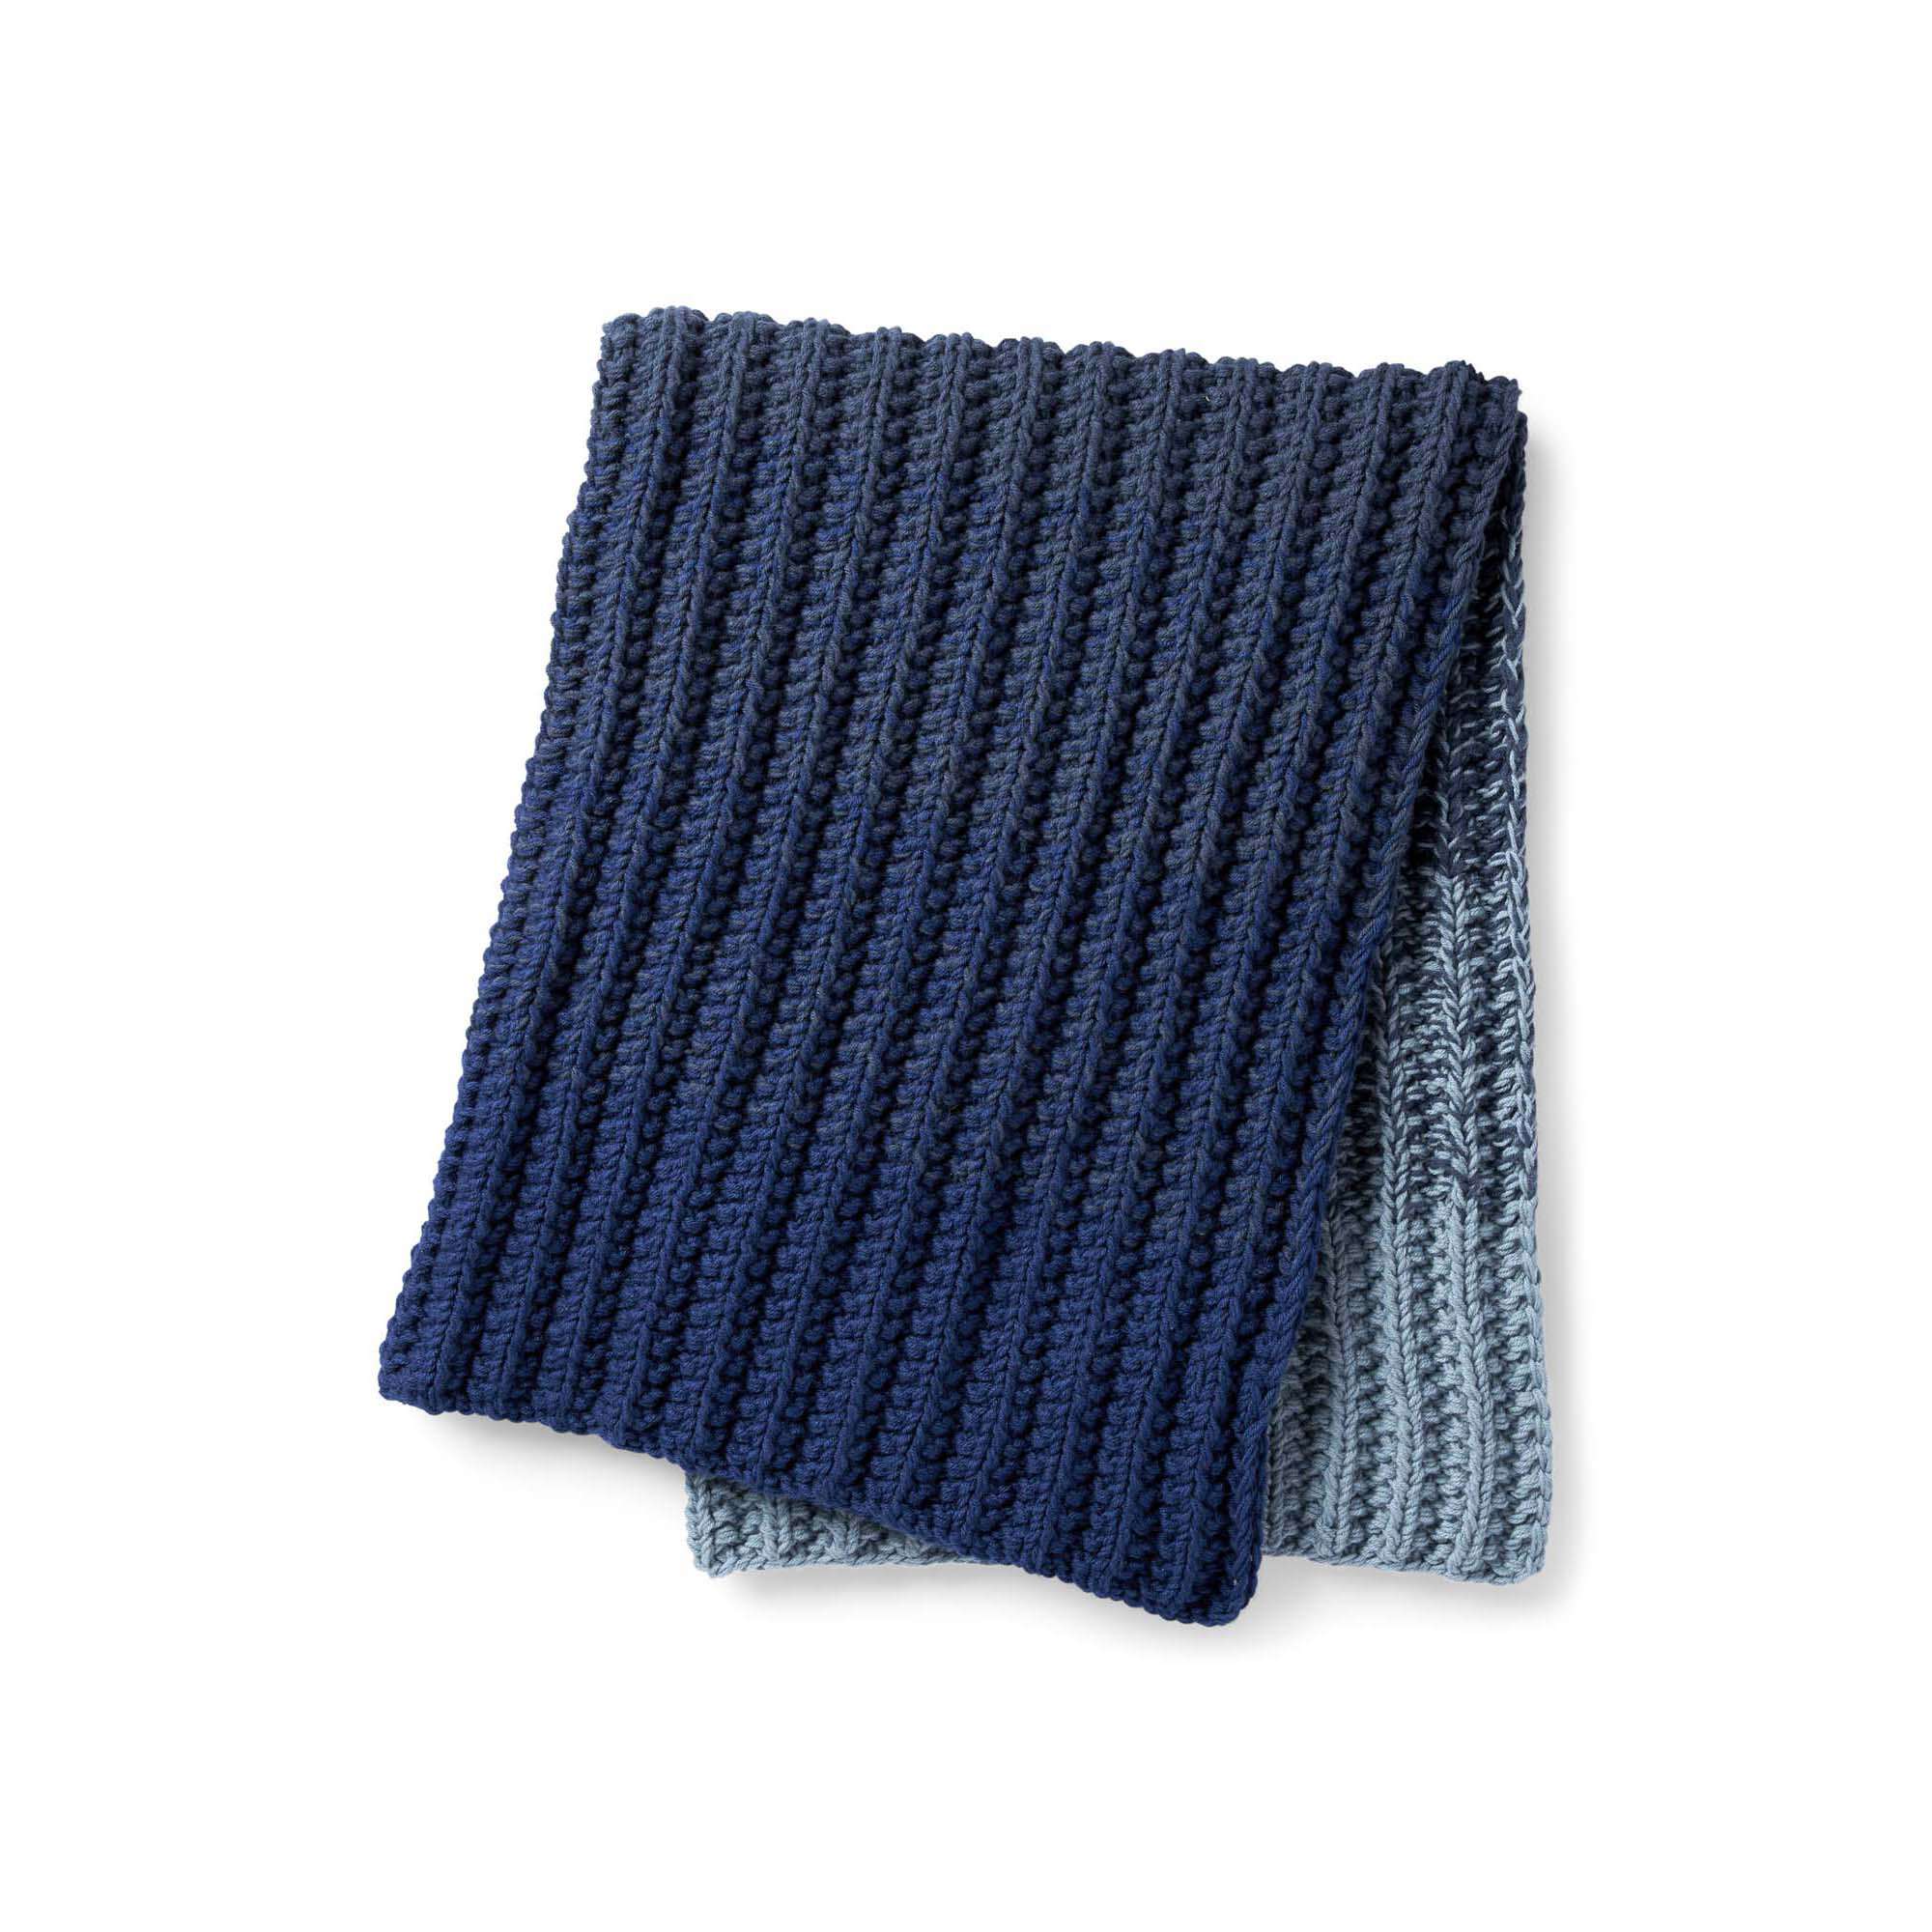 Free Pattern: Ombre Ridge Knit Blanket in Caron One Pound yarn